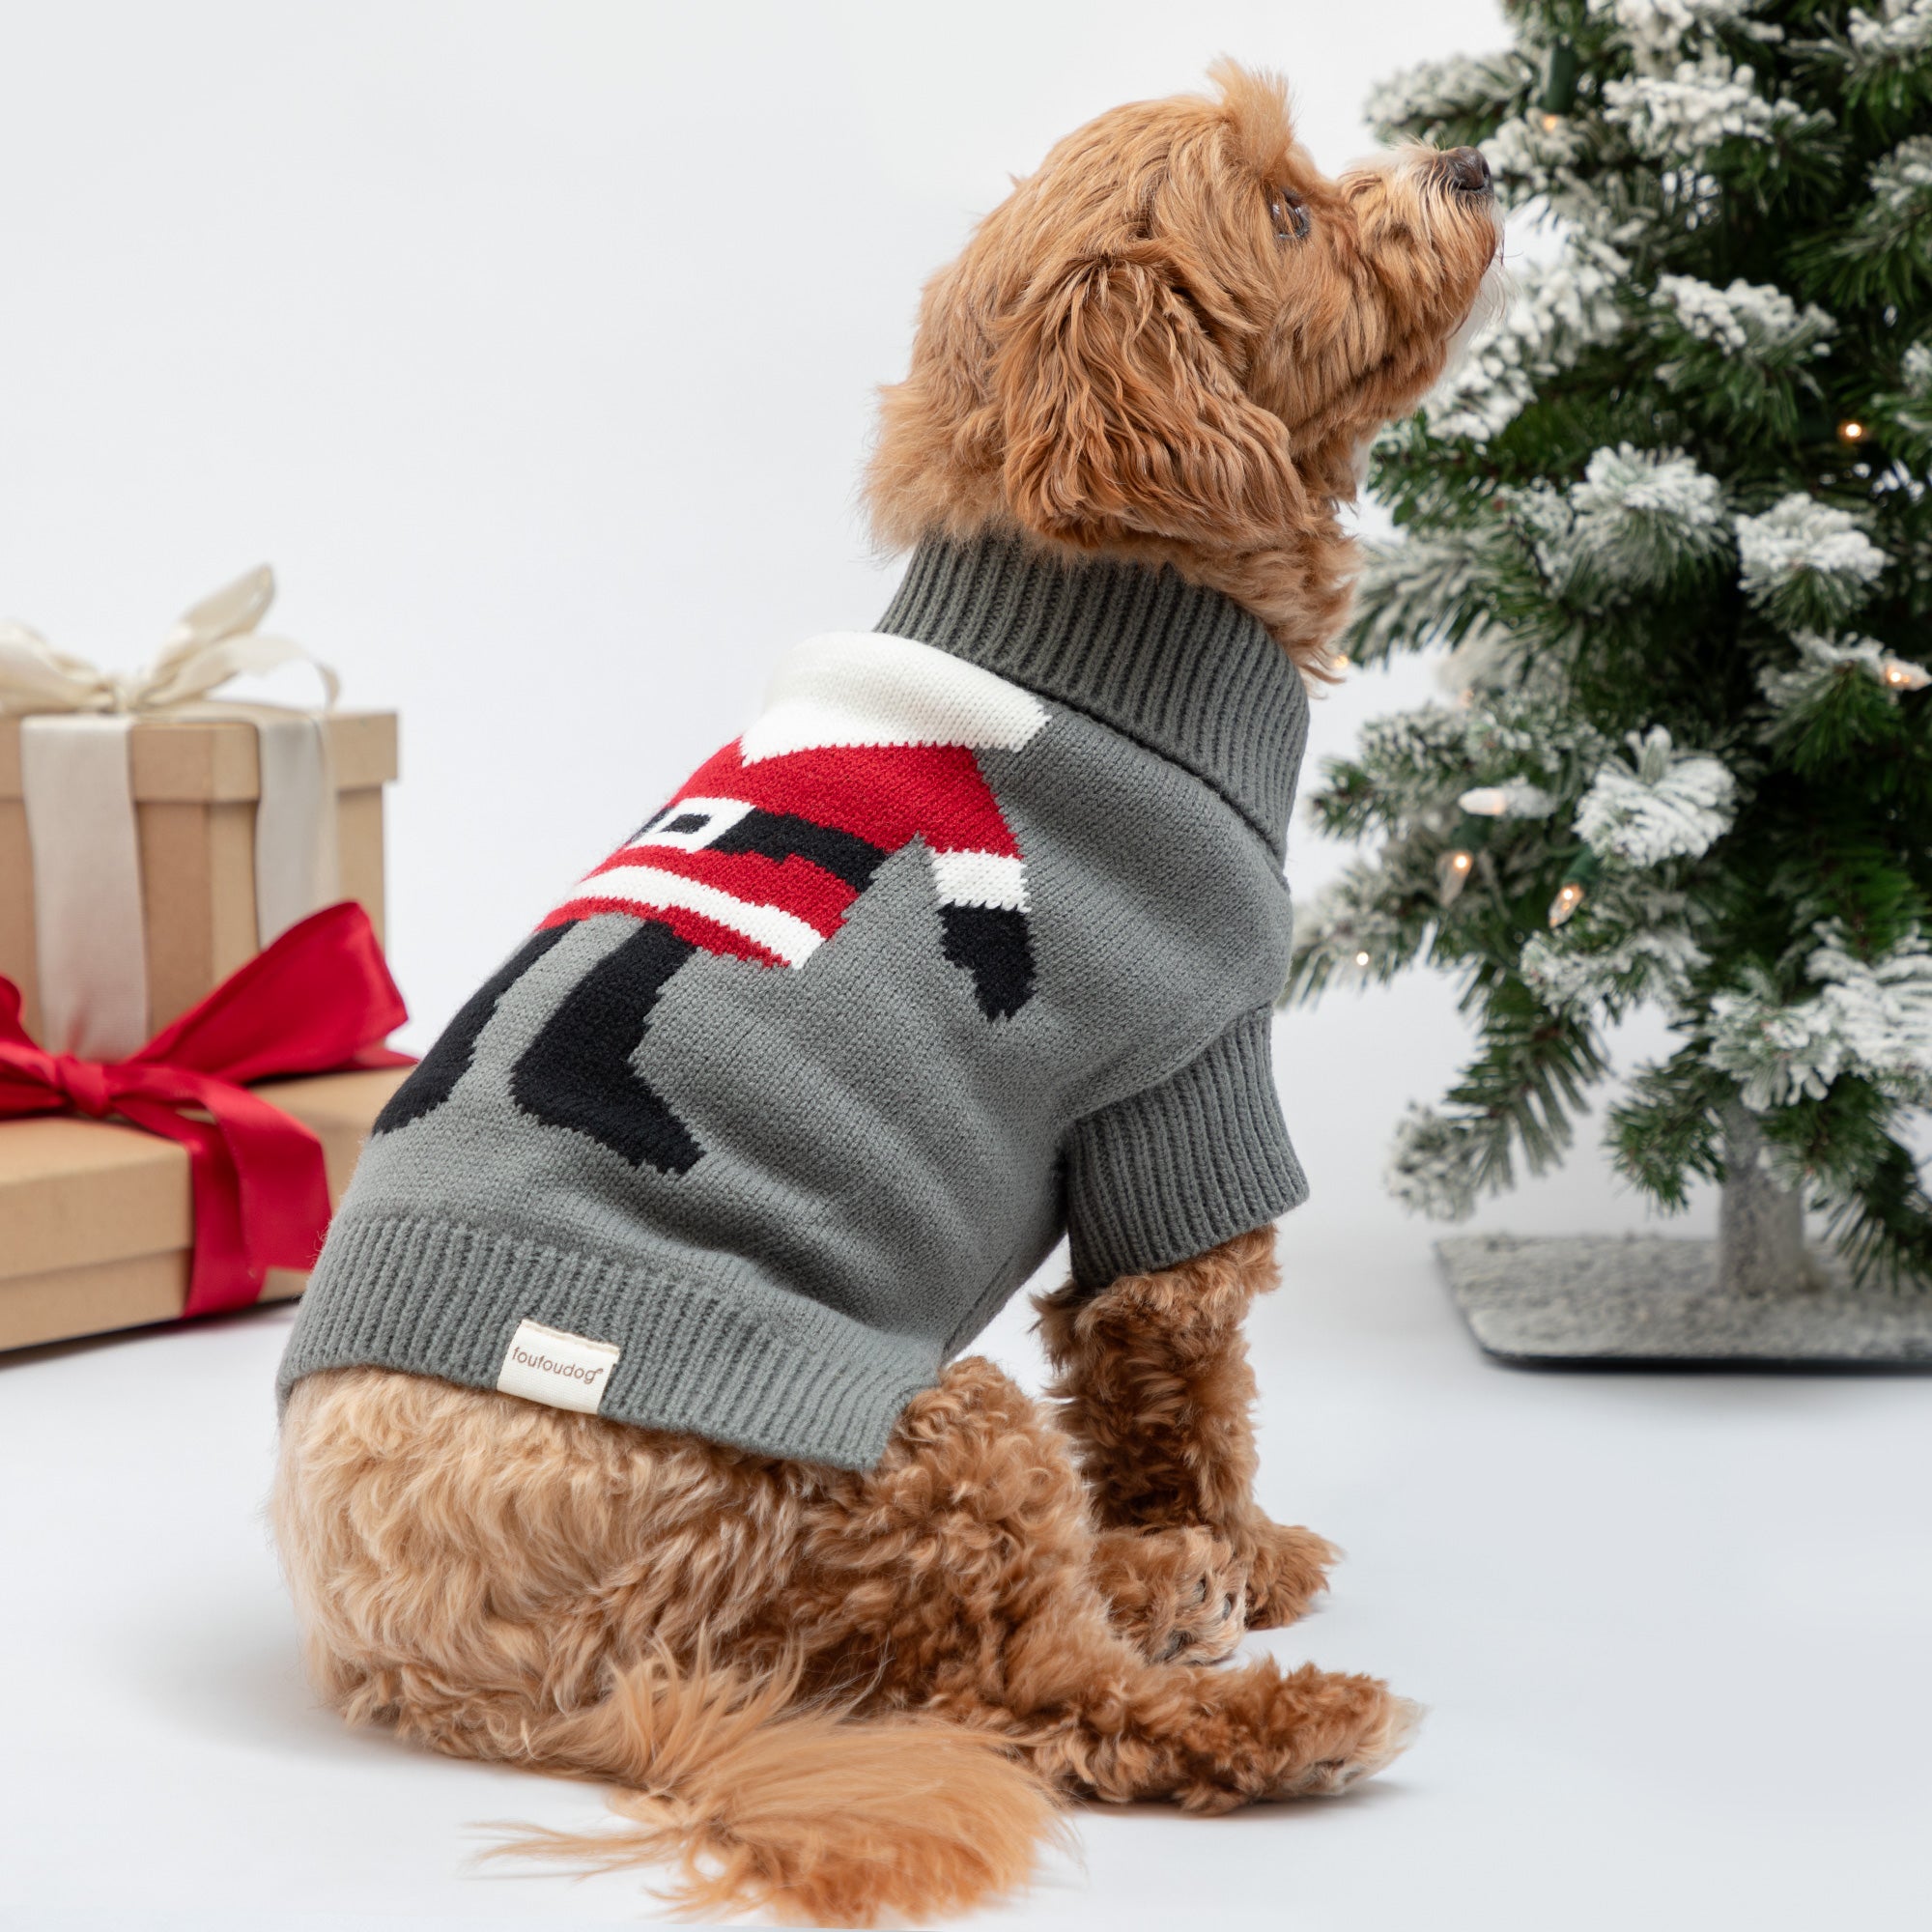 Cozy Christmas Pet Sweater - Santa - XL